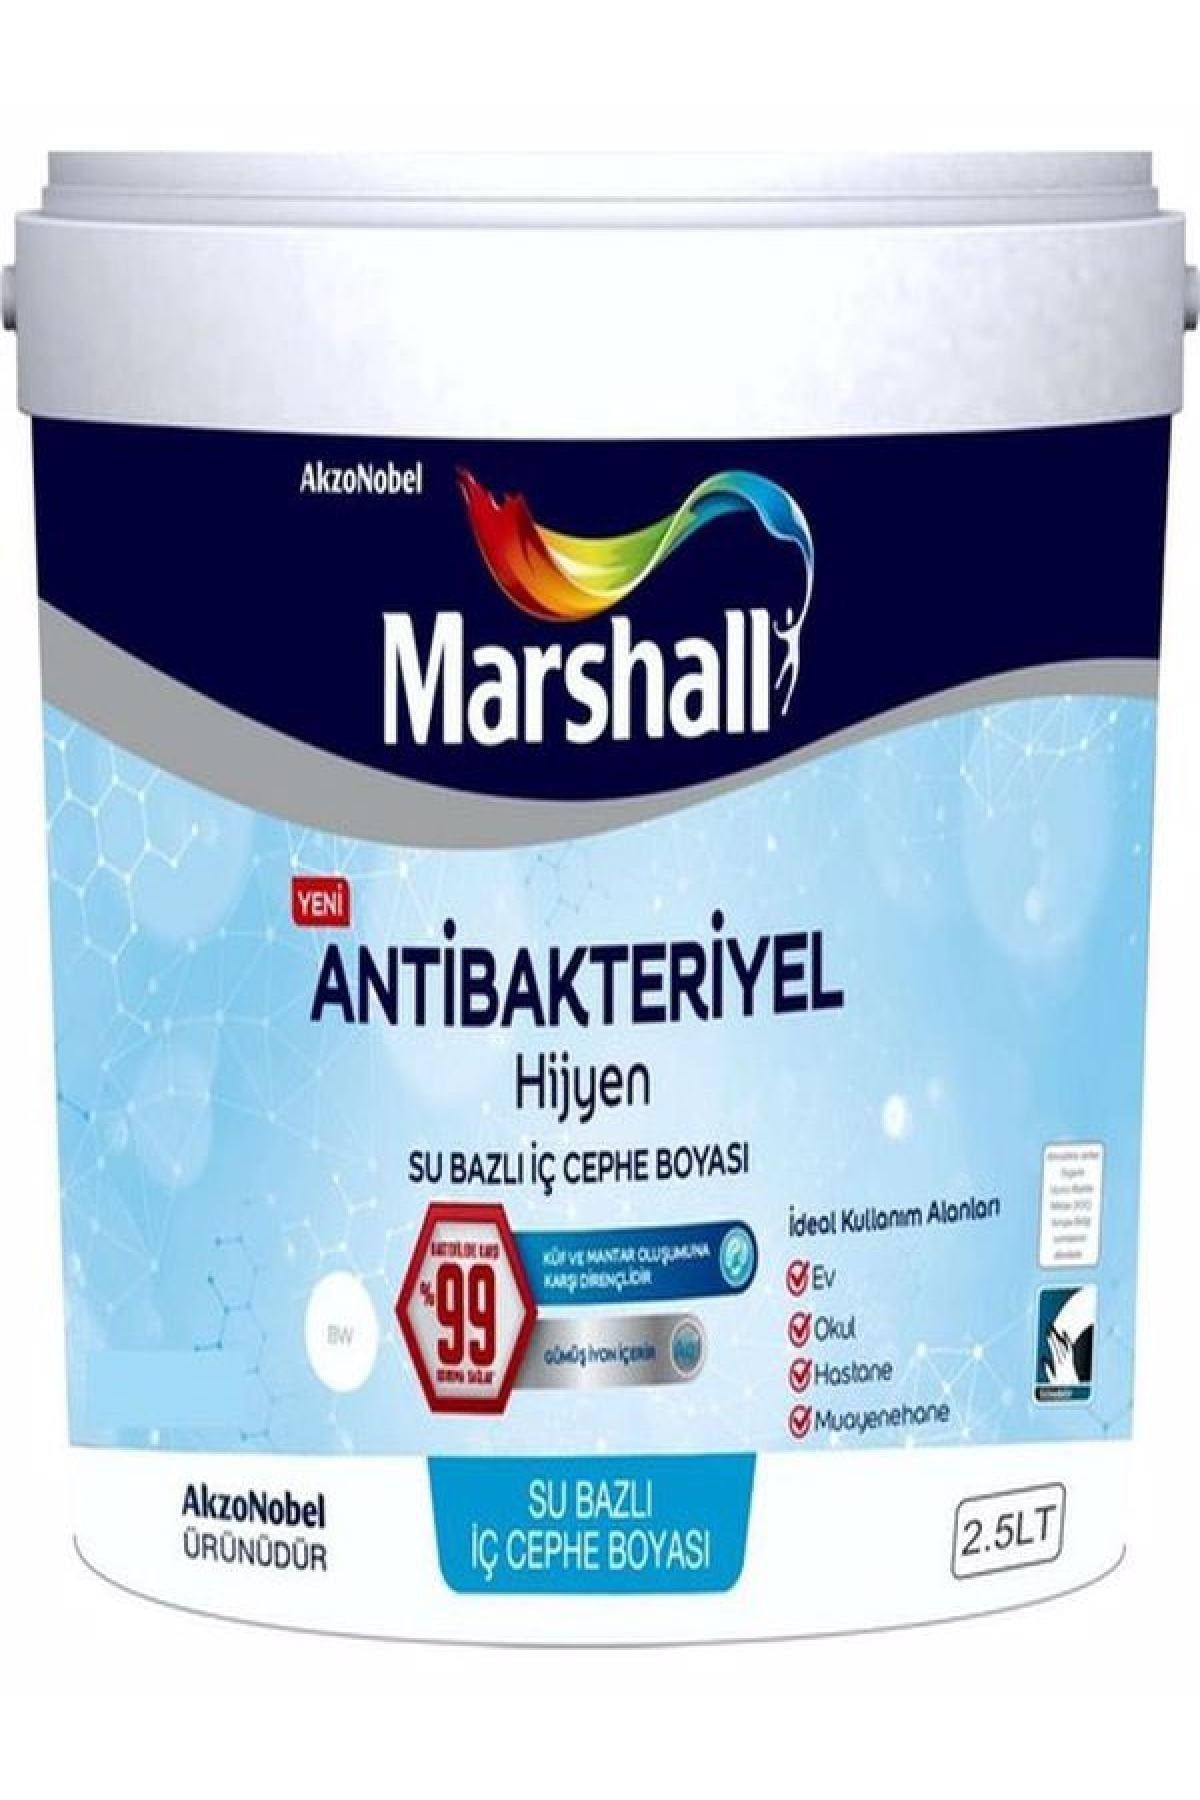 Marshall Antibakteriyel Hijyen Ipek Mat Iç Cephe Boyası Lila 2,5 Lt. (3,5 Kg)